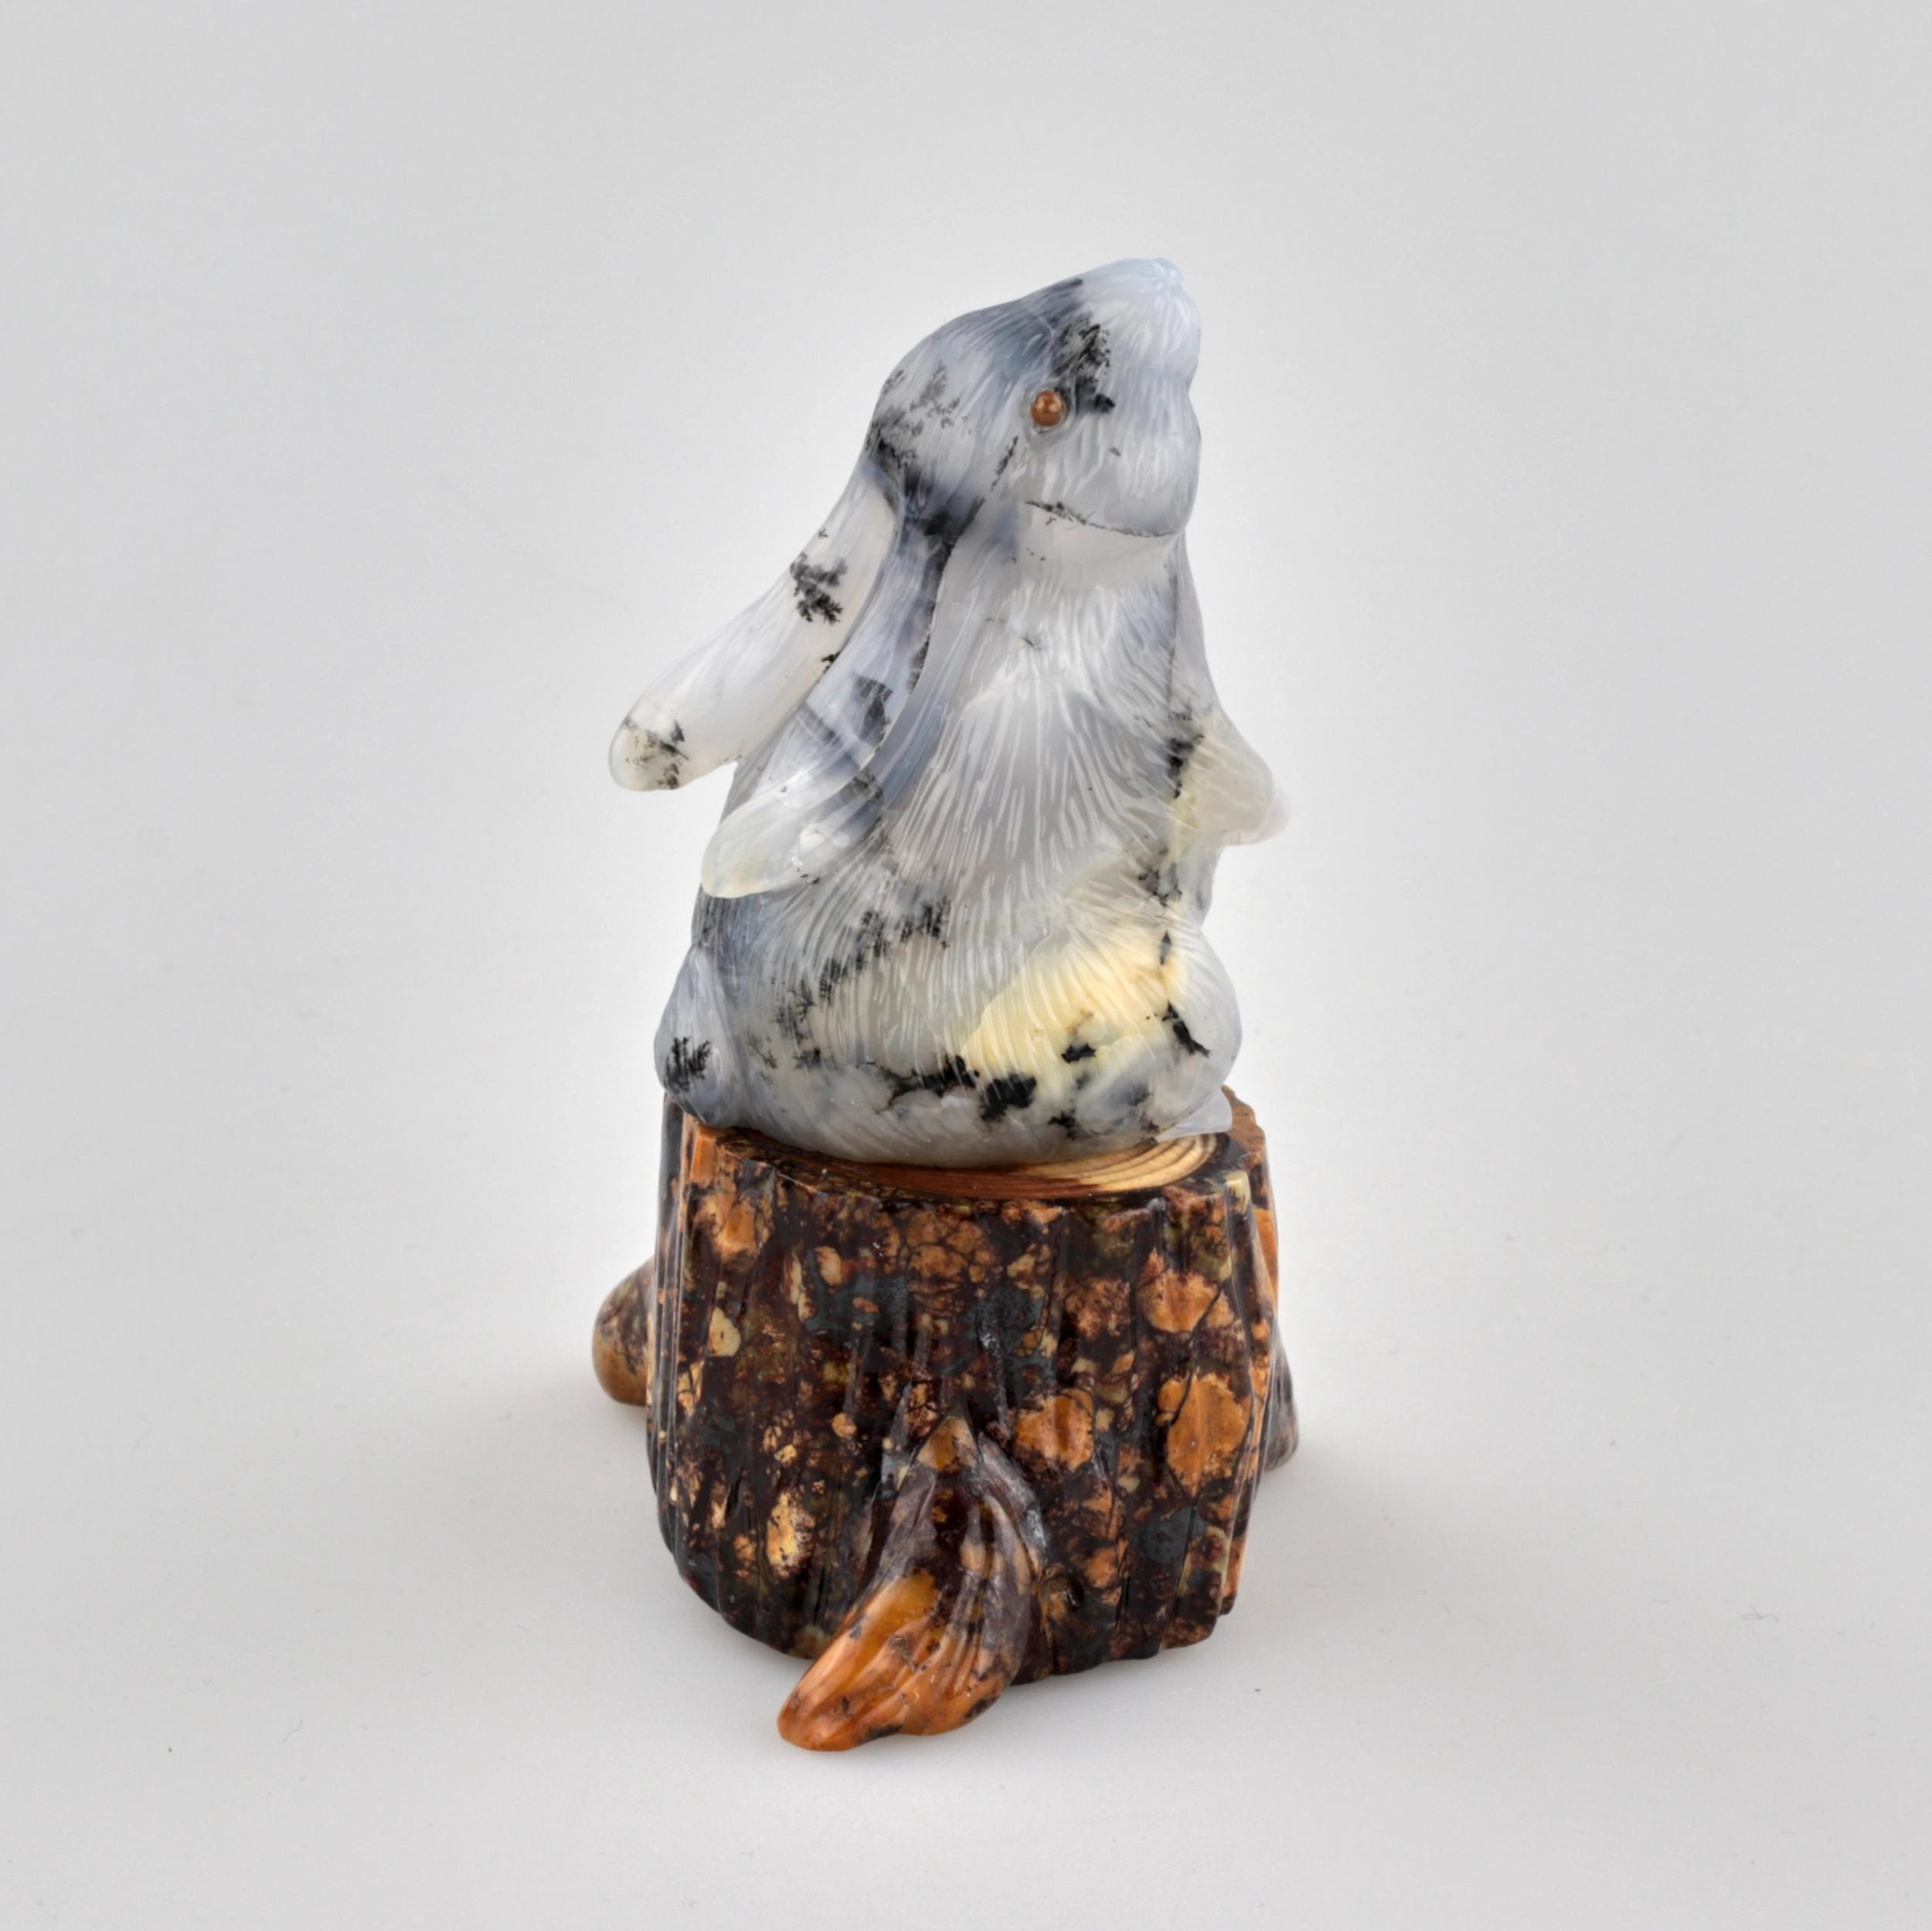 Figurine "Hare on a stump" - Image 5 of 6